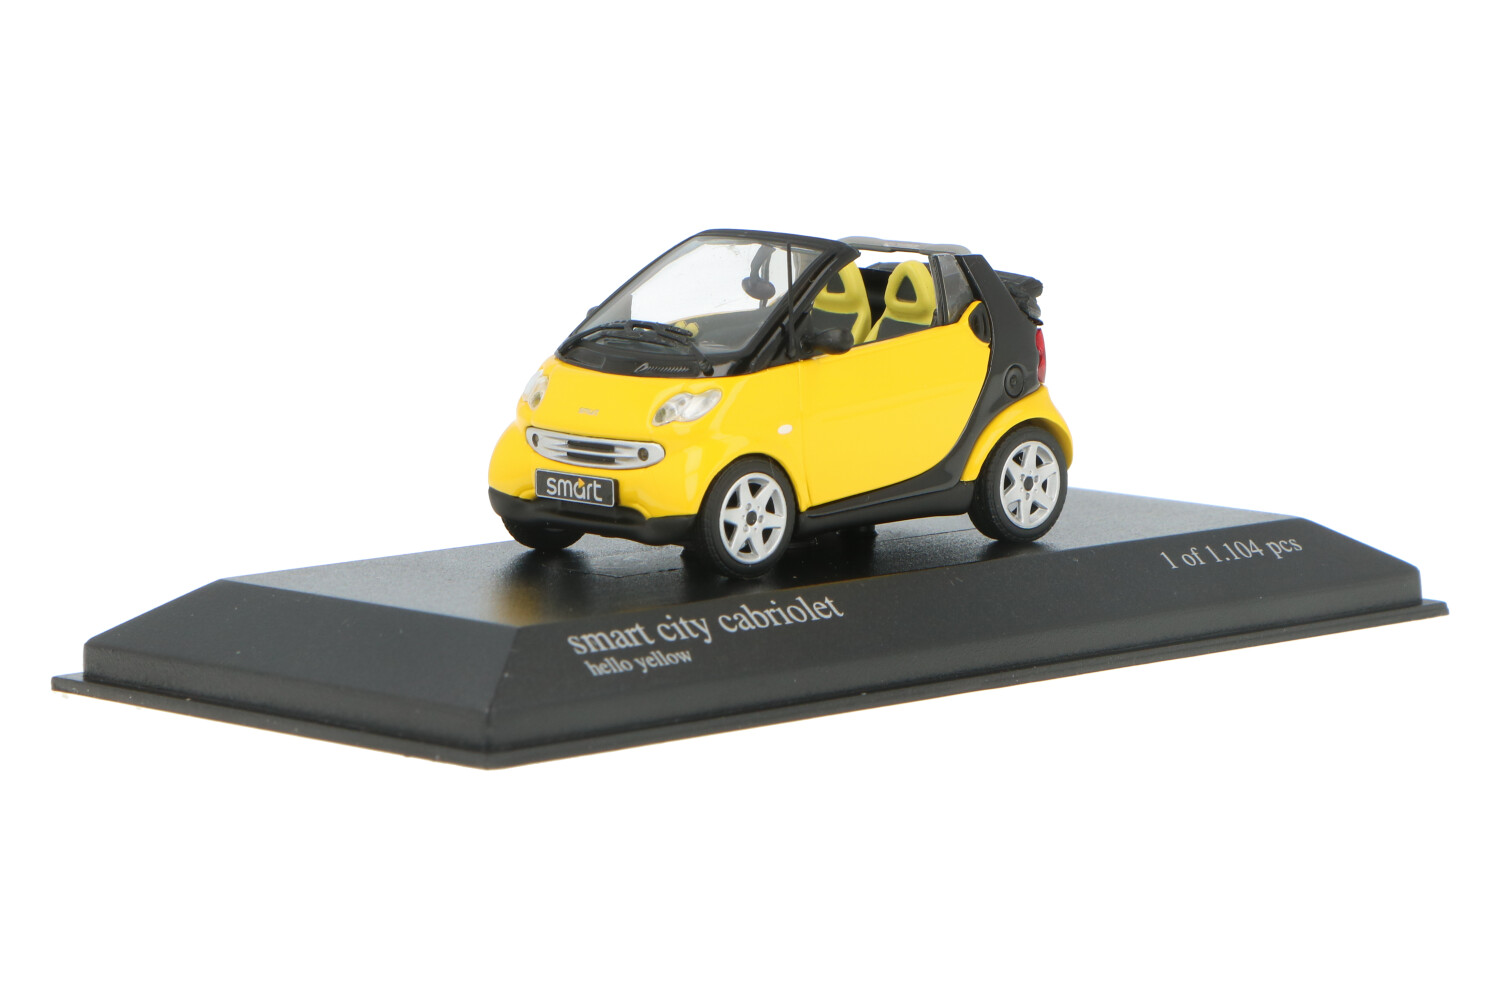 Smart City Cabriolet - Modelauto schaal 1:43